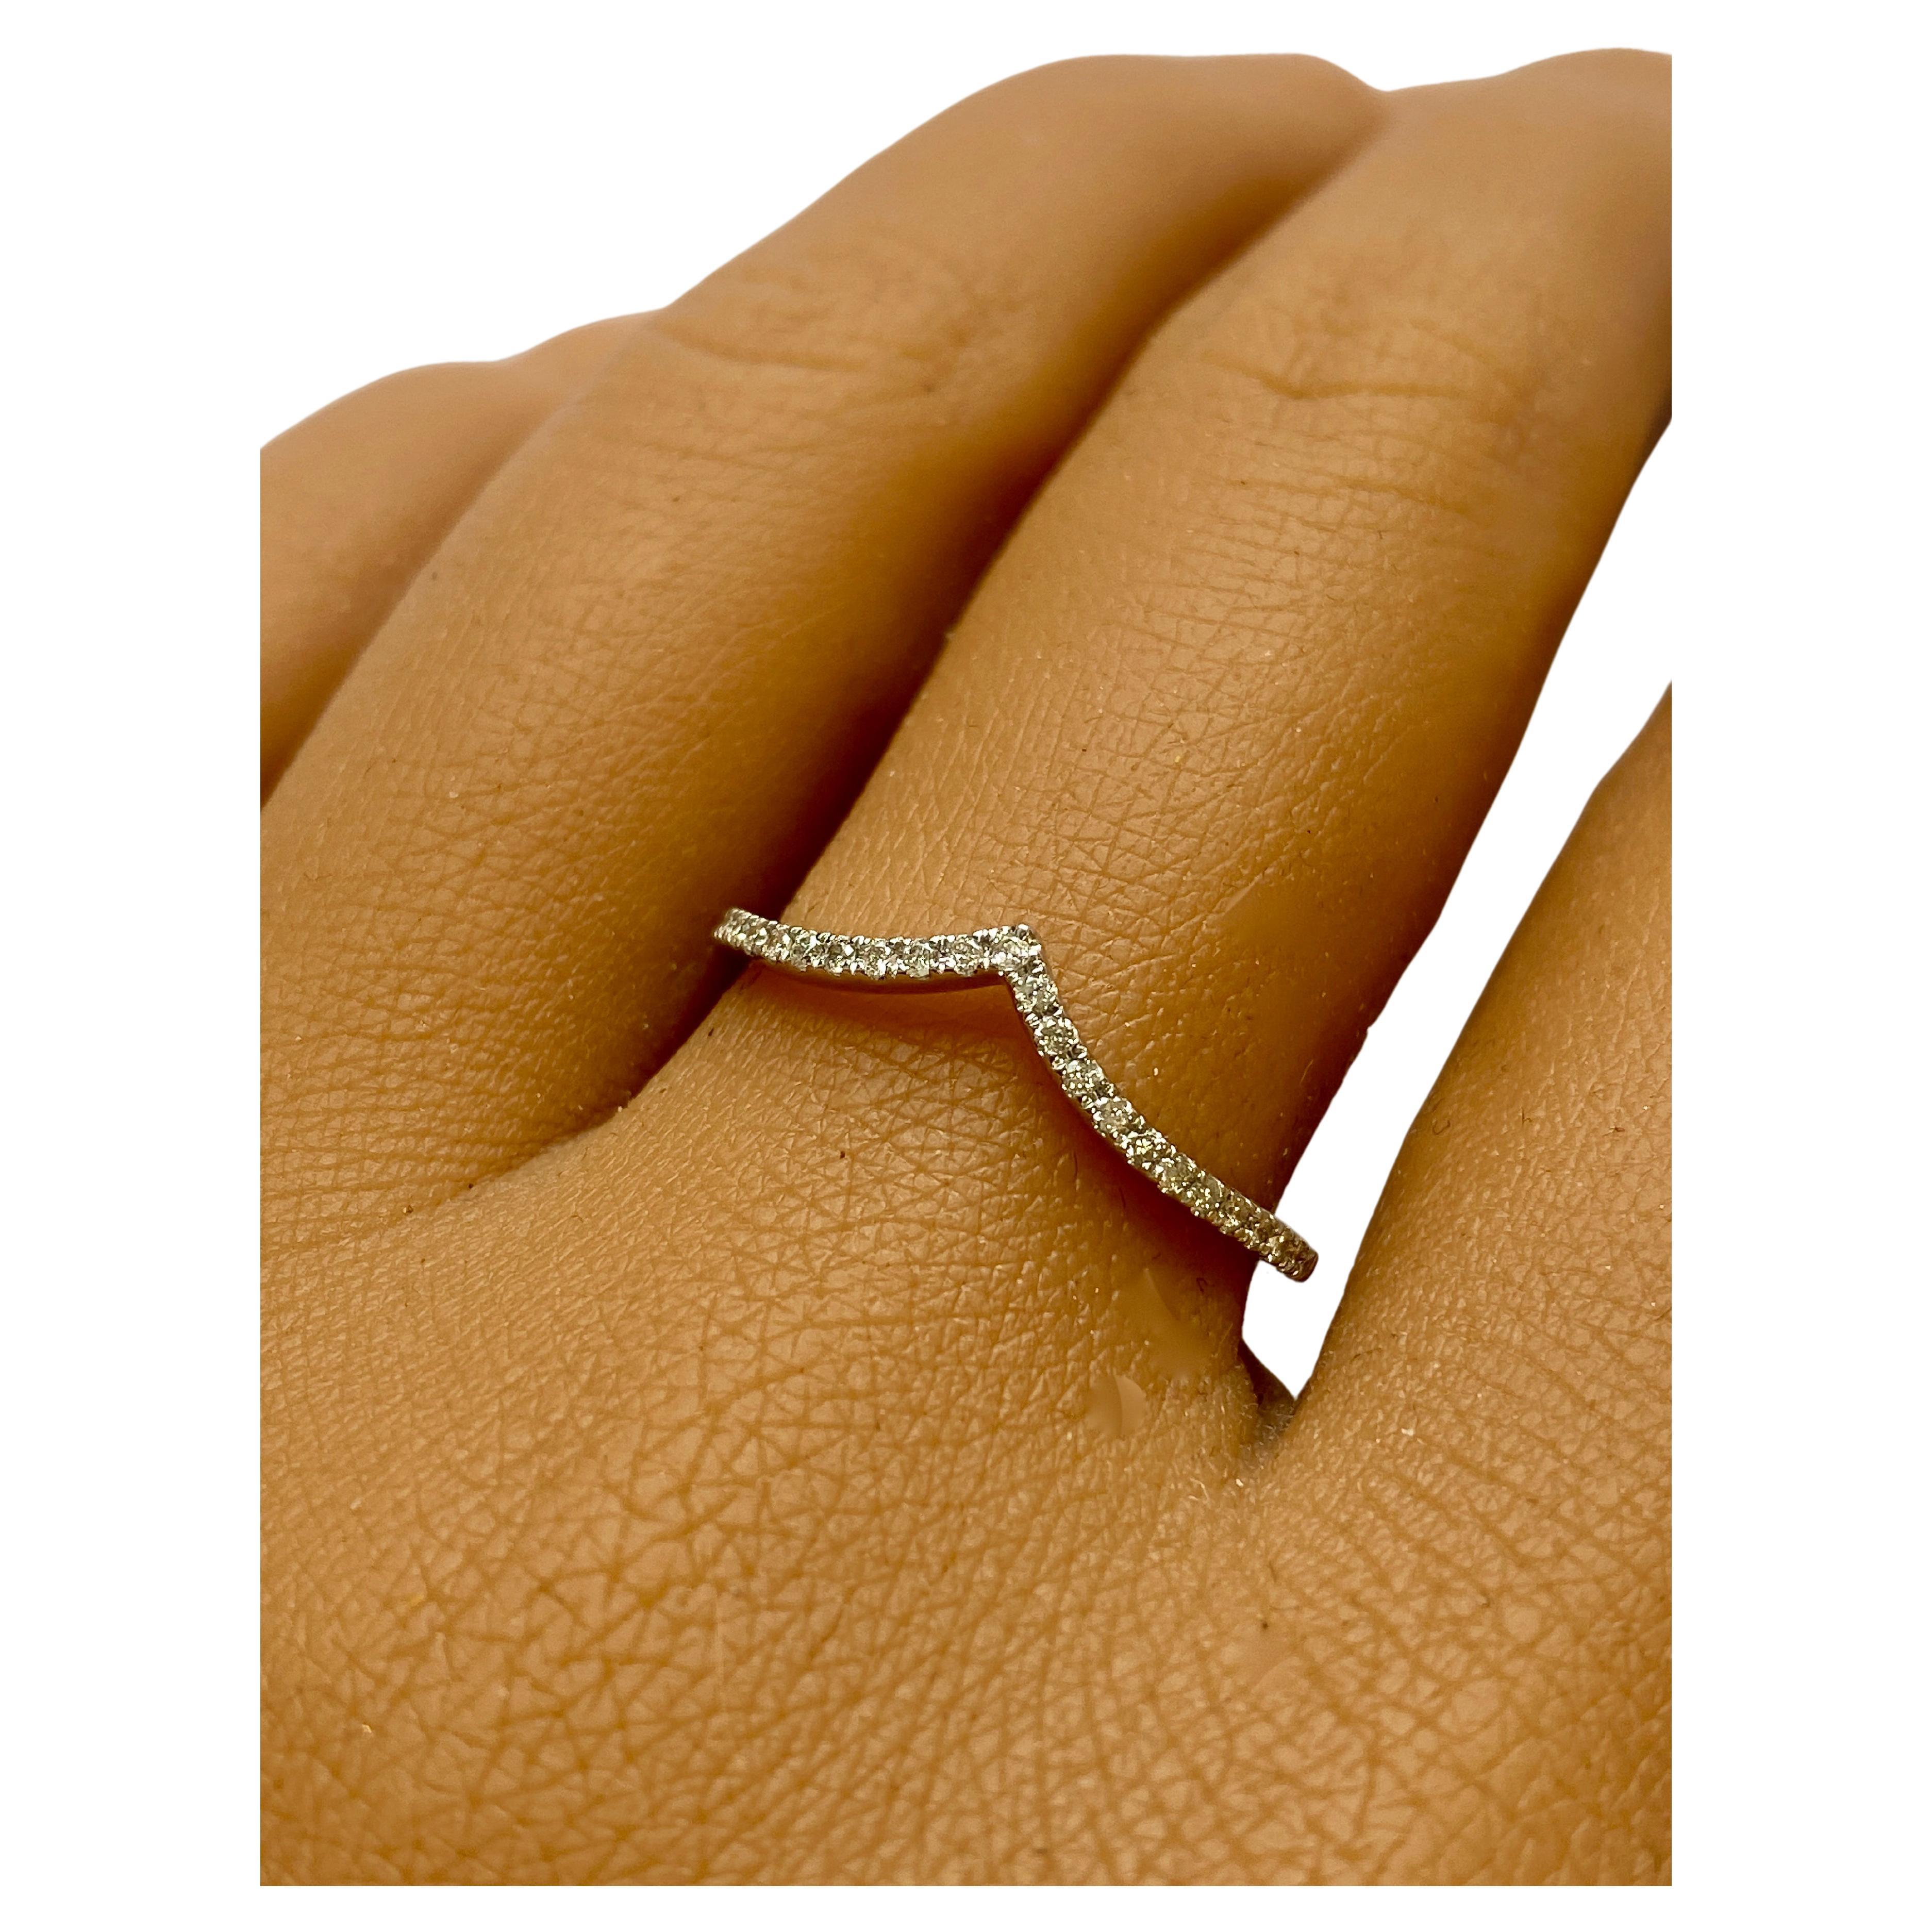 Diamond Wedding Ring, 14k White Gold Band with Natural Diamonds, Minimalist Ring